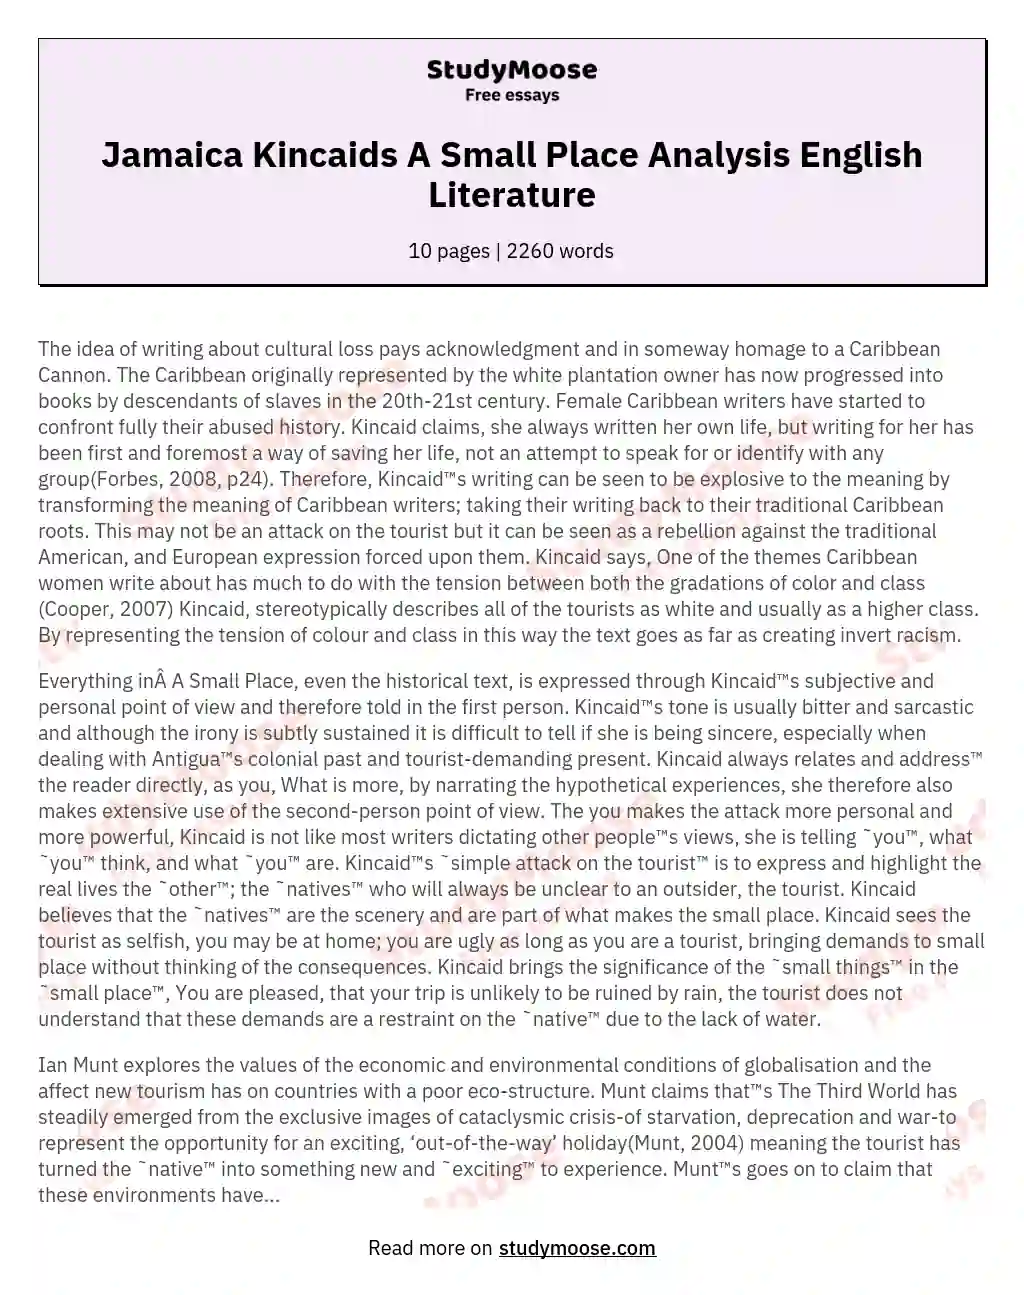 Jamaica Kincaids A Small Place Analysis English Literature essay